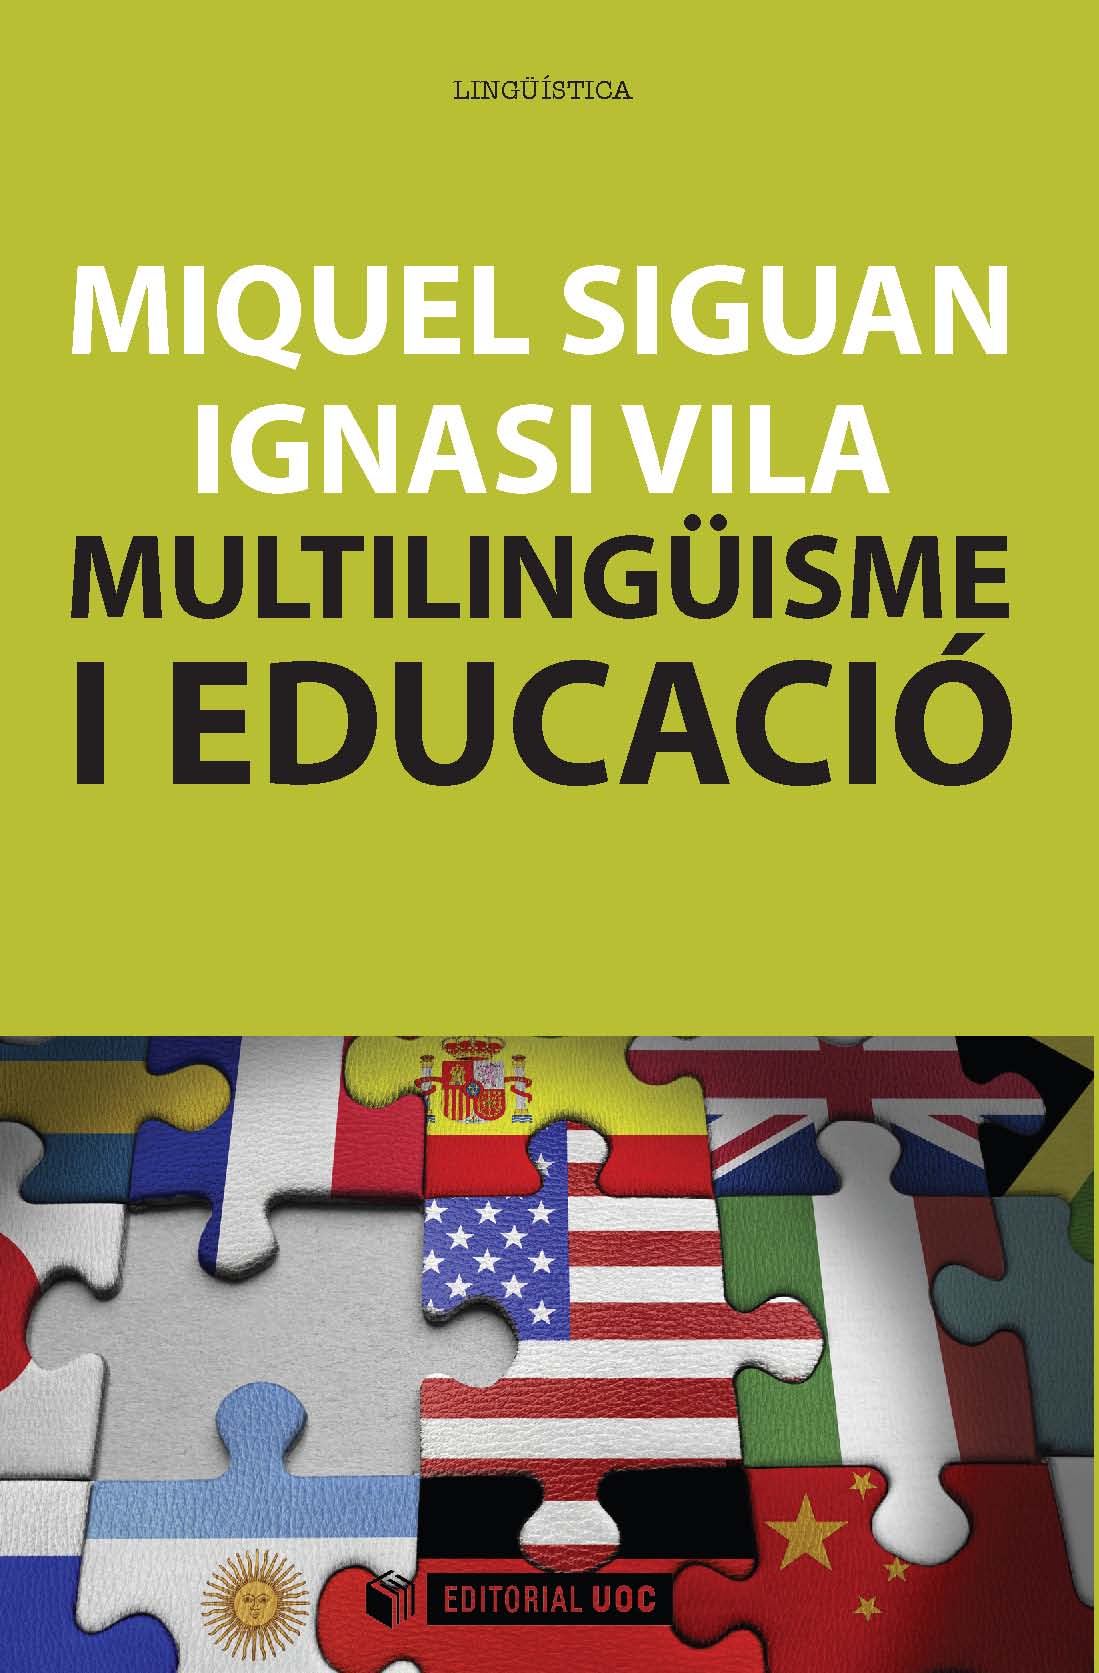 MultilingÃ¼isme i educaciÃ³